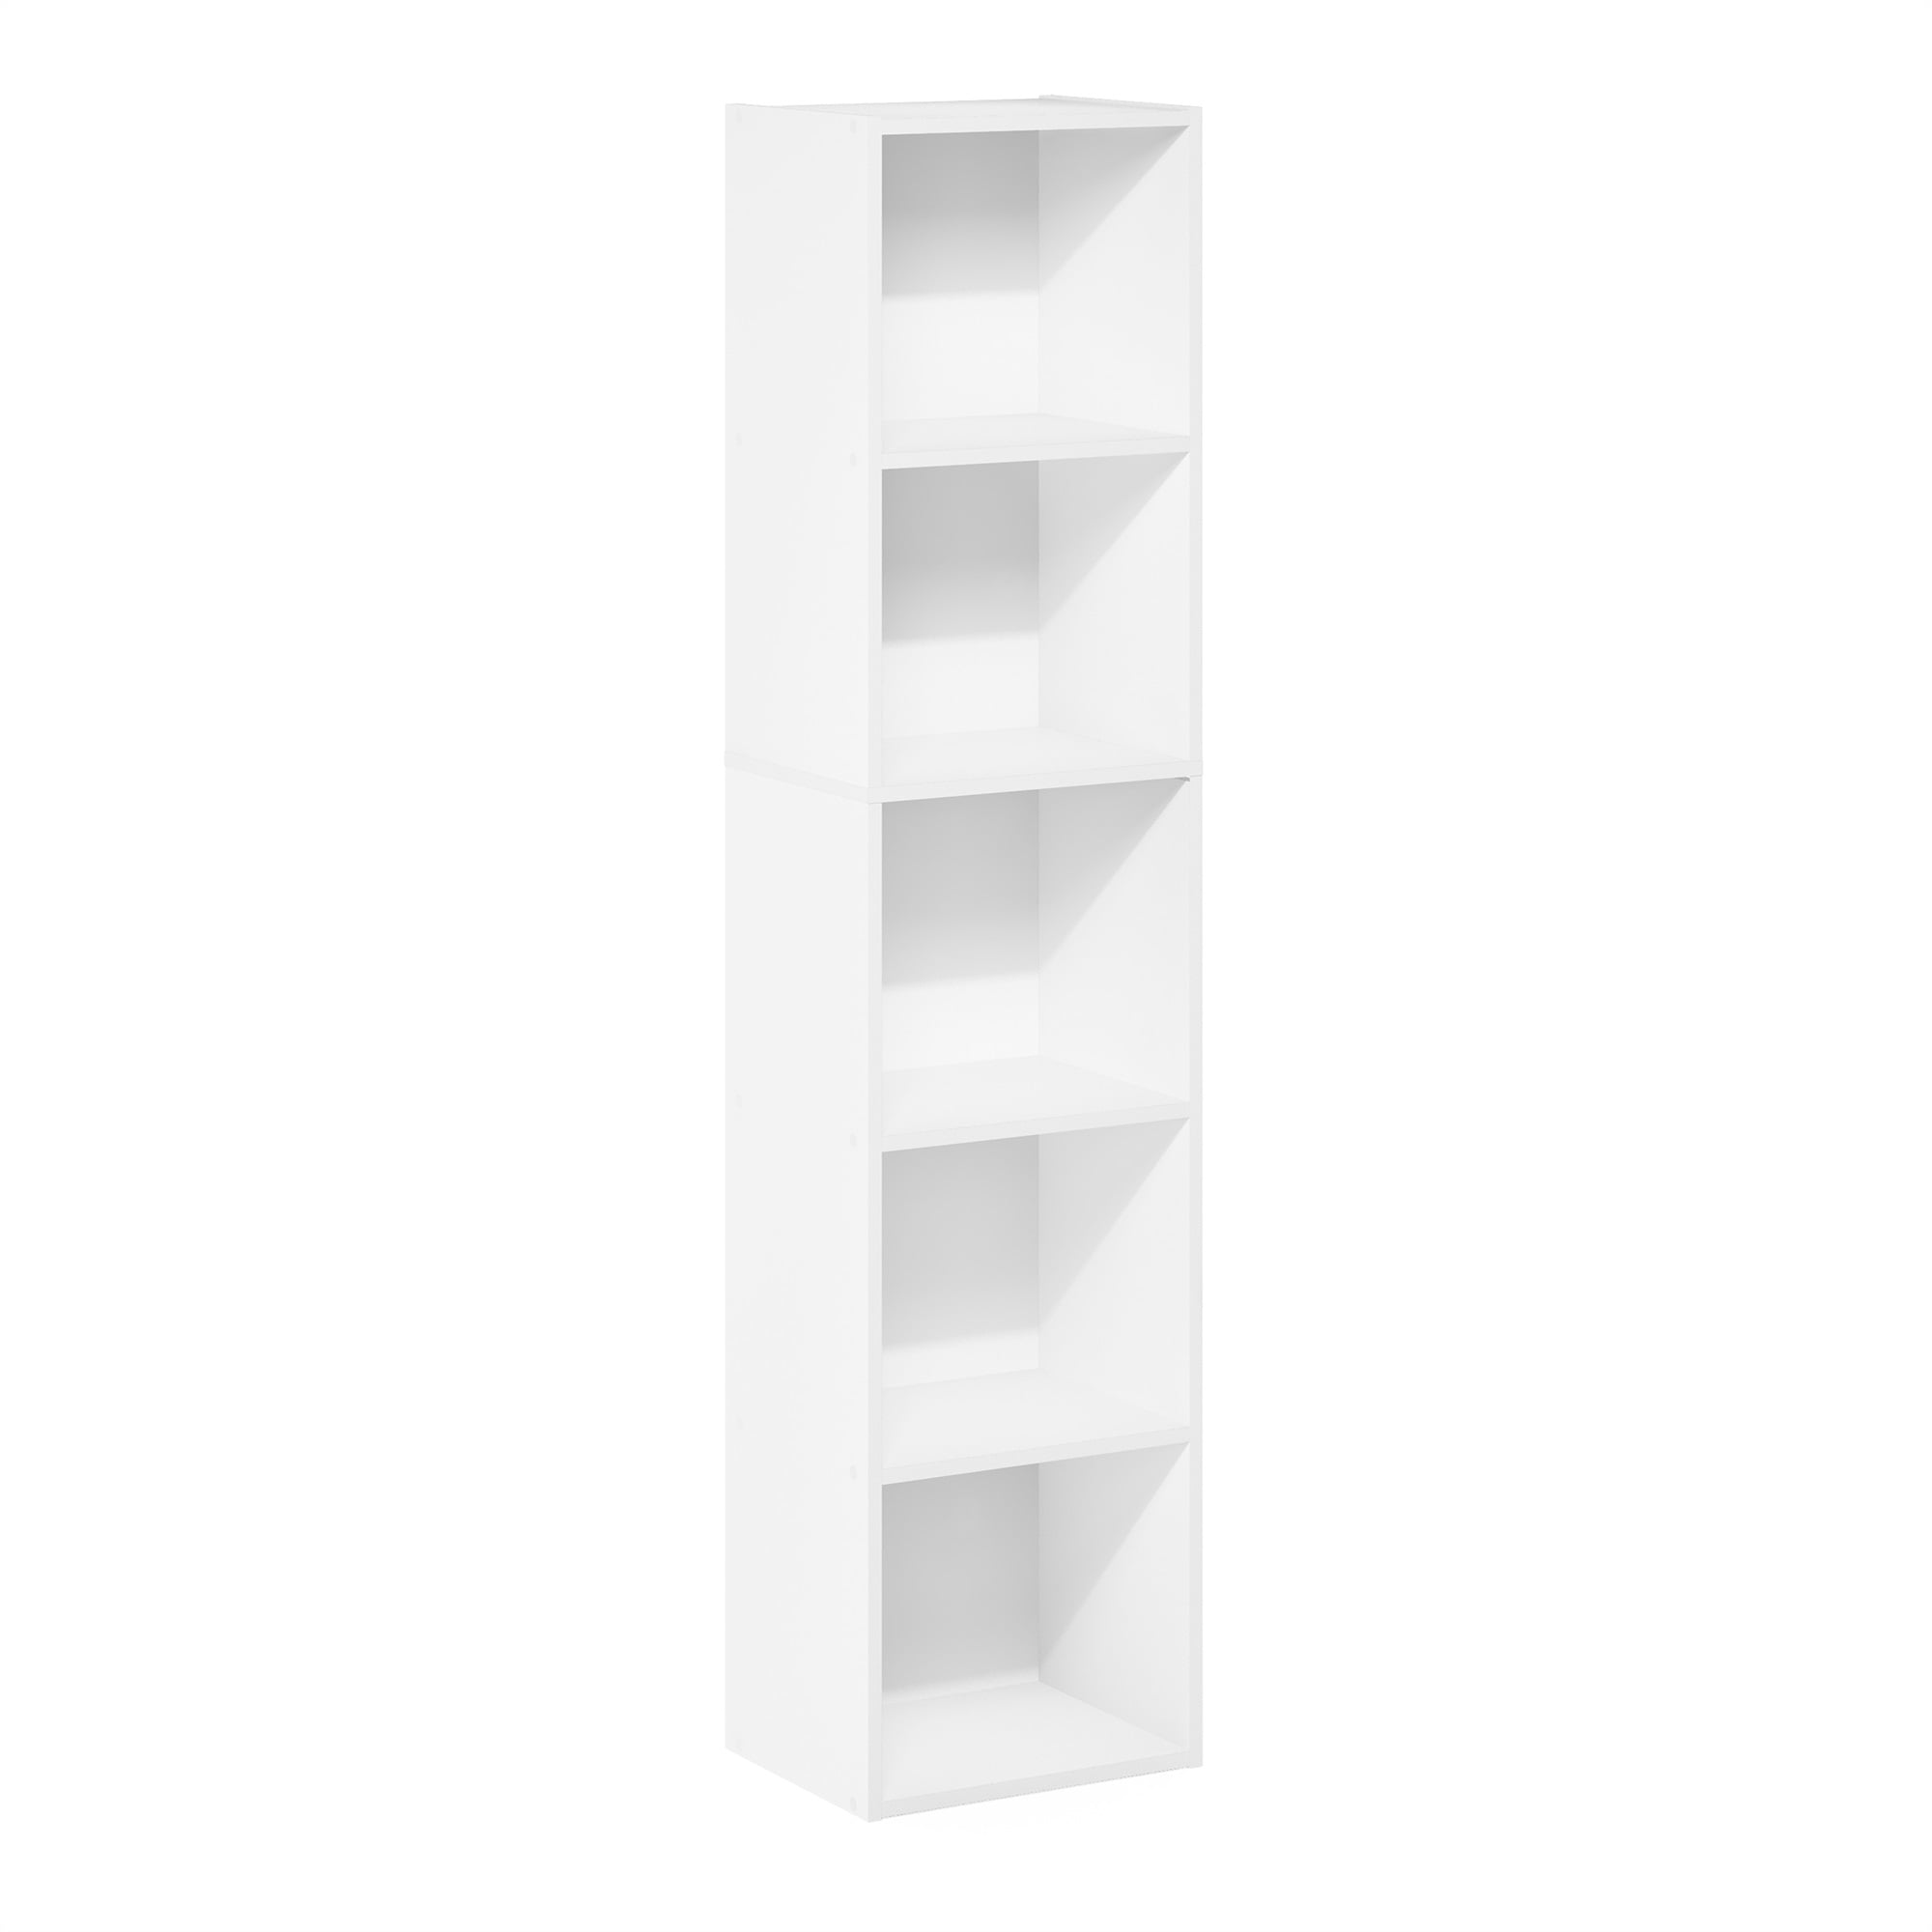 2 4 Tier Standing Shelf Shelves Storage Bookcase CD/DVD Organizer Home Office Furniture White 3 3 Tier by Salerno